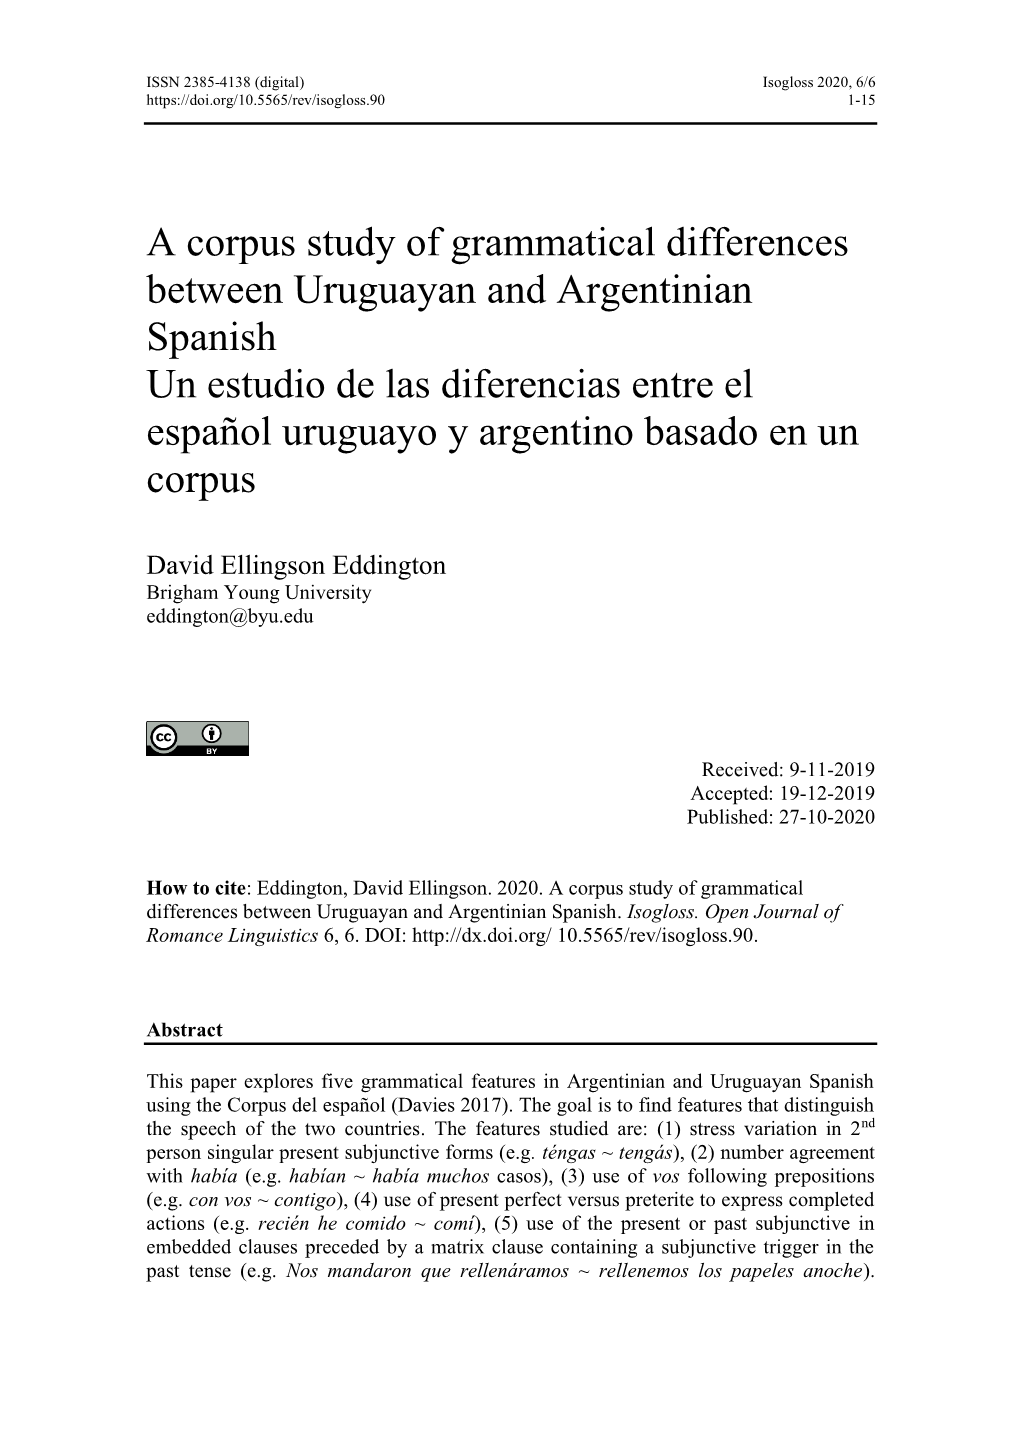 A Corpus Study of Grammatical Differences Between Uruguayan